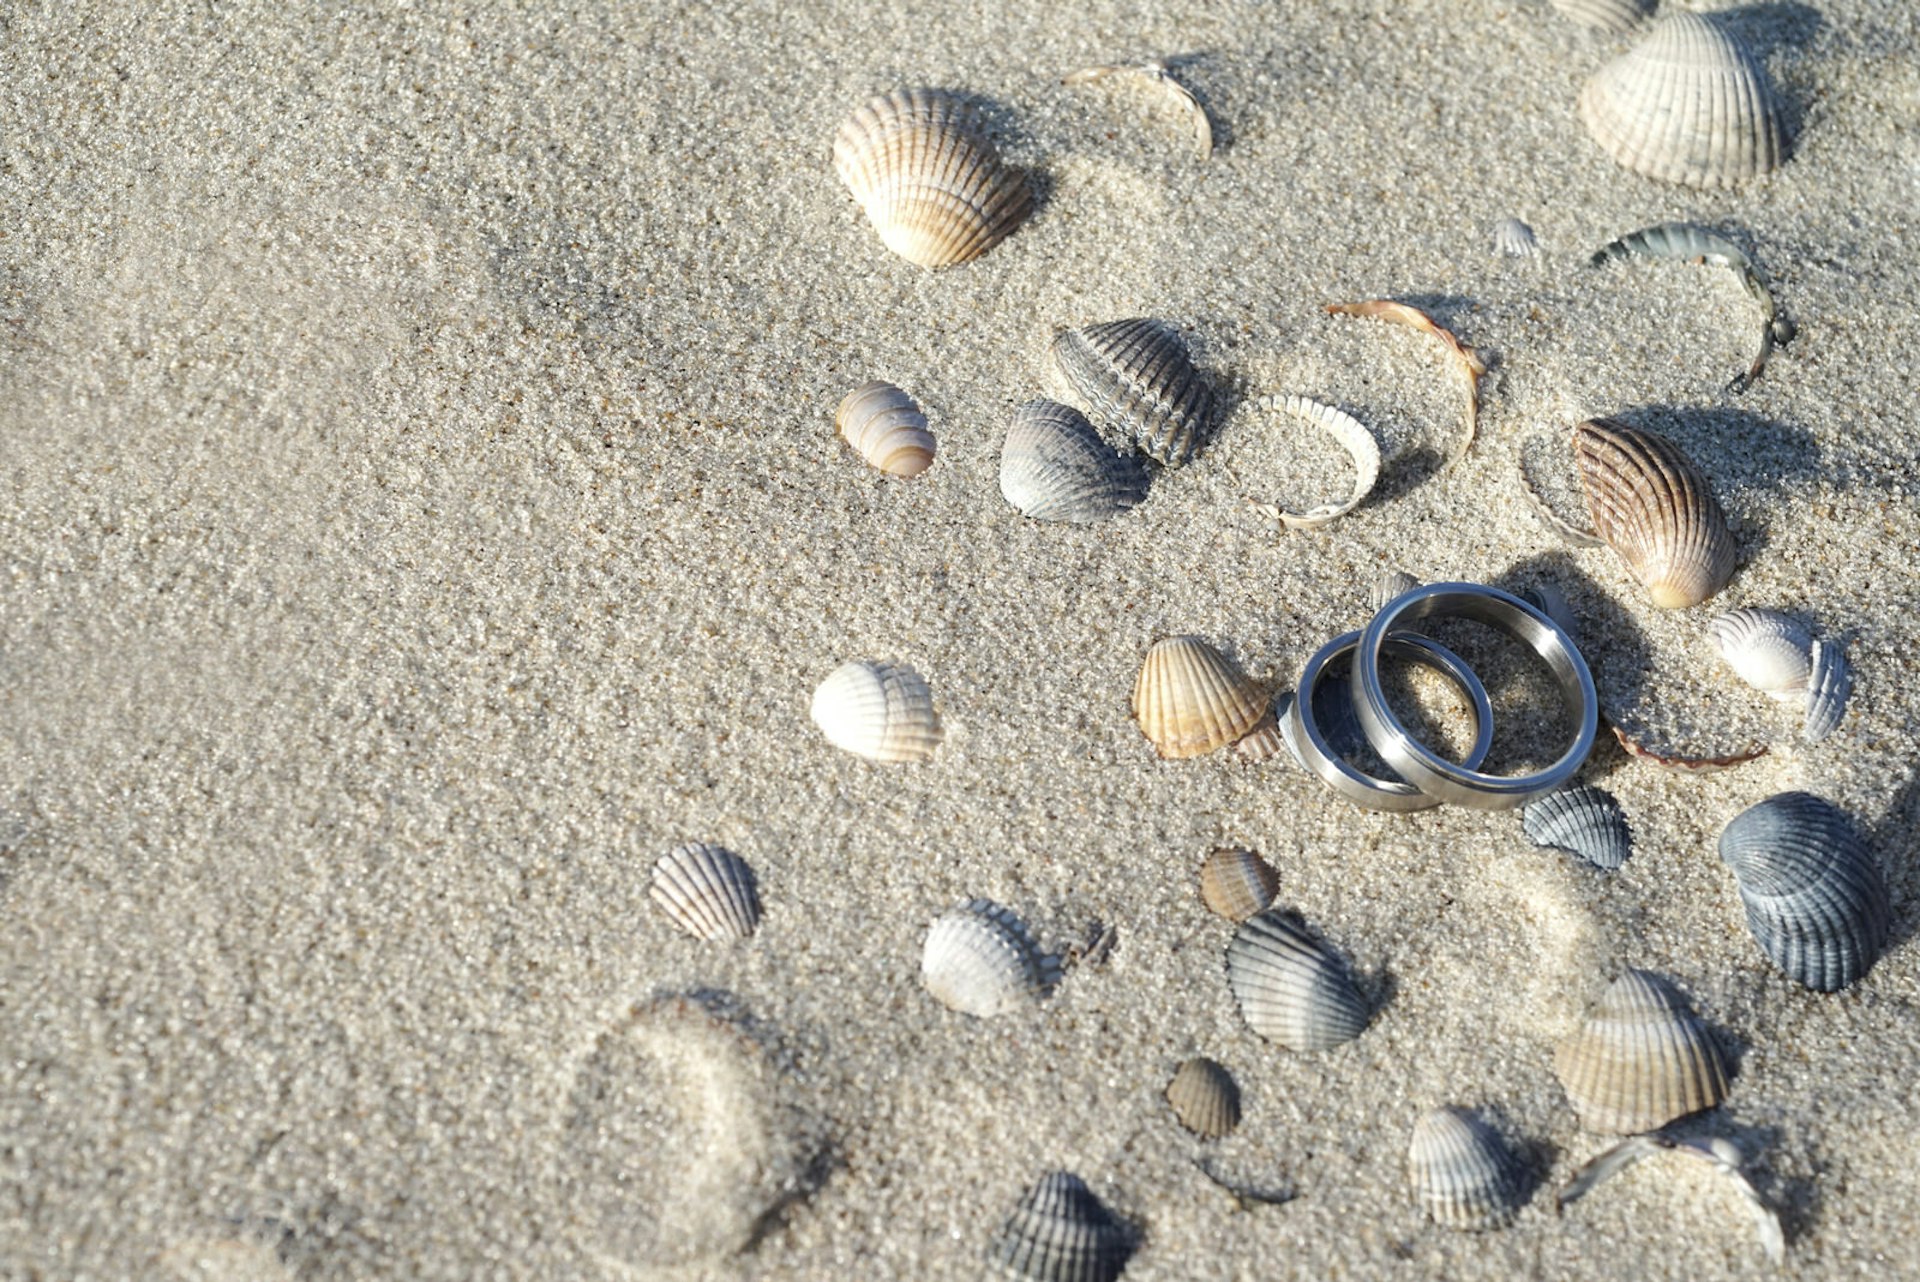 Wedding rings amongst shells on a sandy beach.